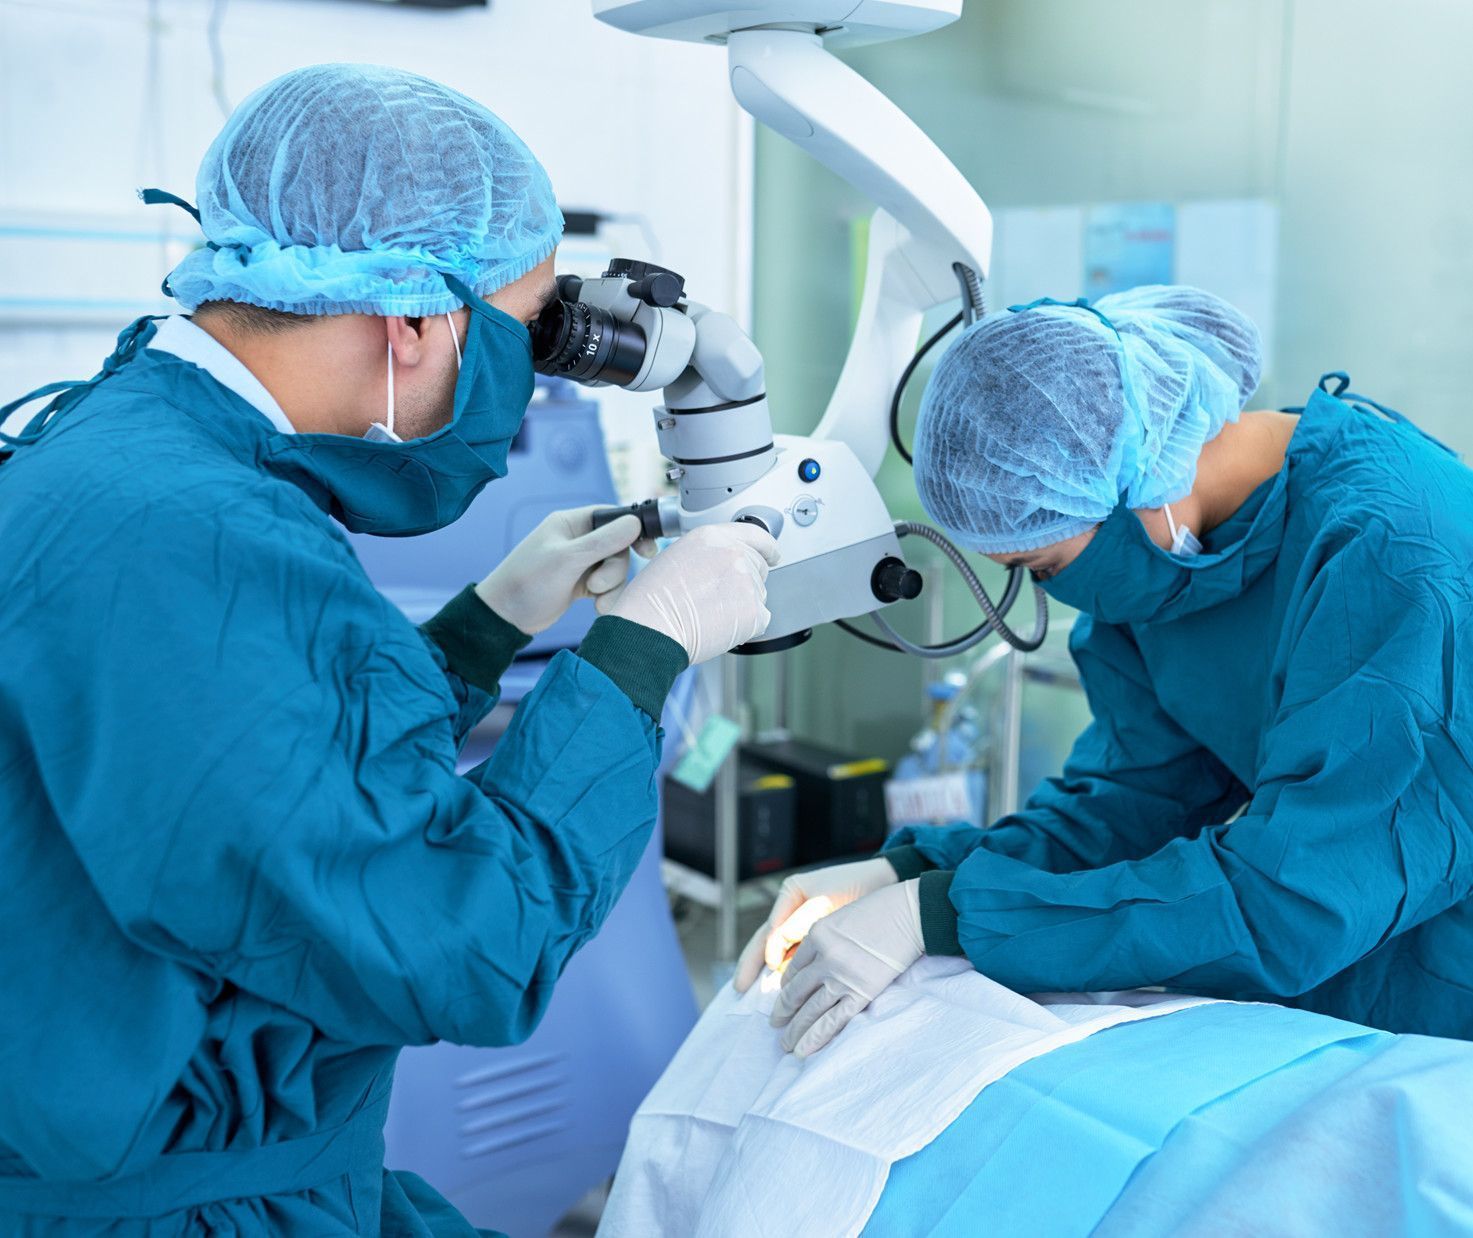 eye doctors performing treatments